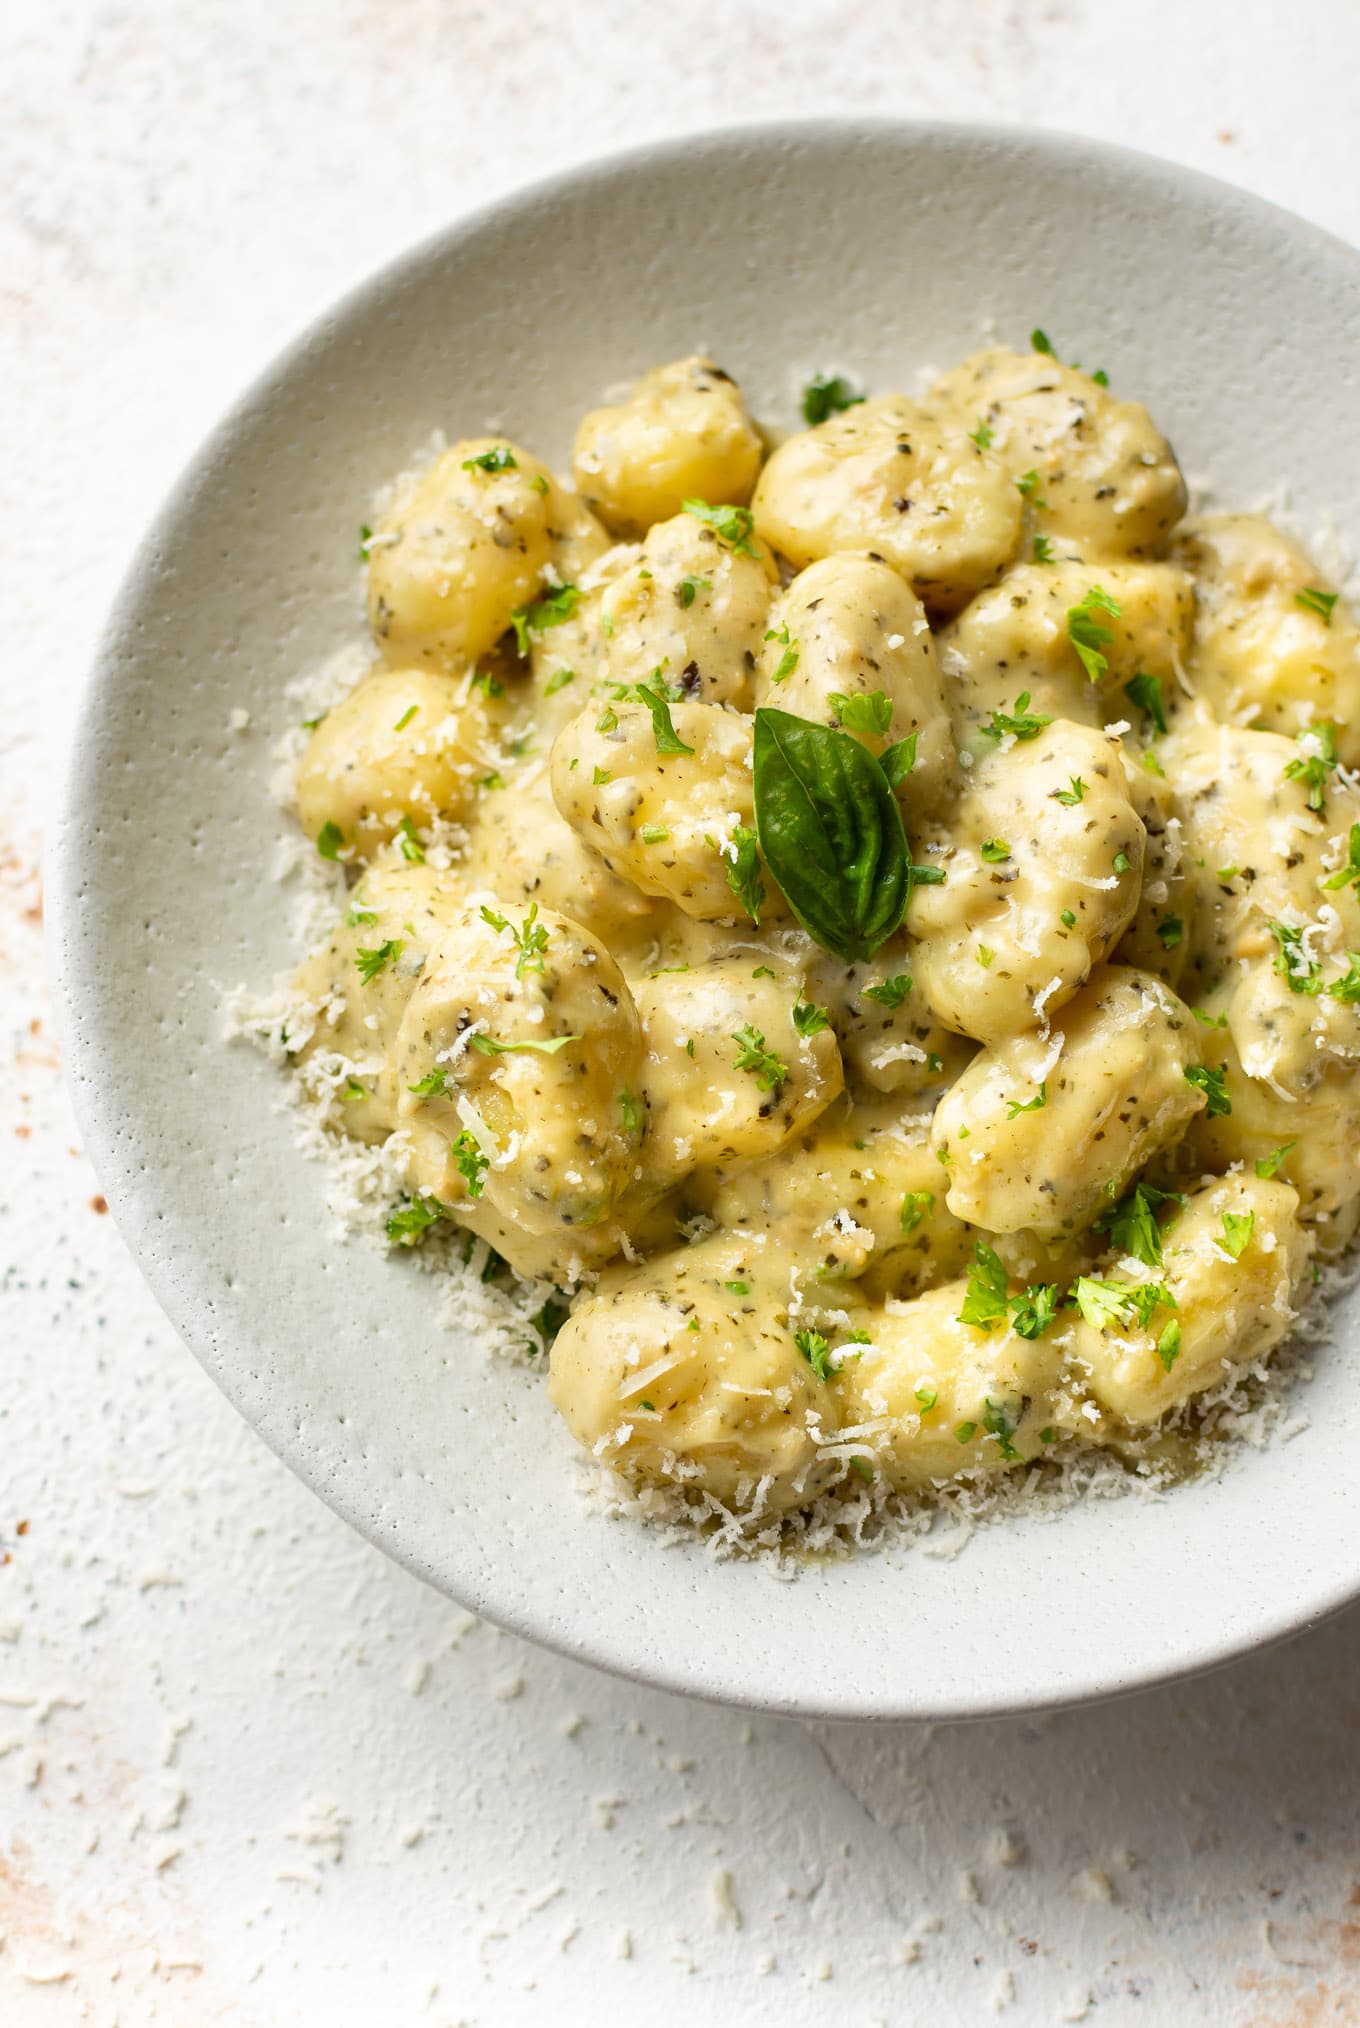 https://www.saltandlavender.com/wp-content/uploads/2020/08/creamy-pesto-gnocchi-recipe-1.jpg